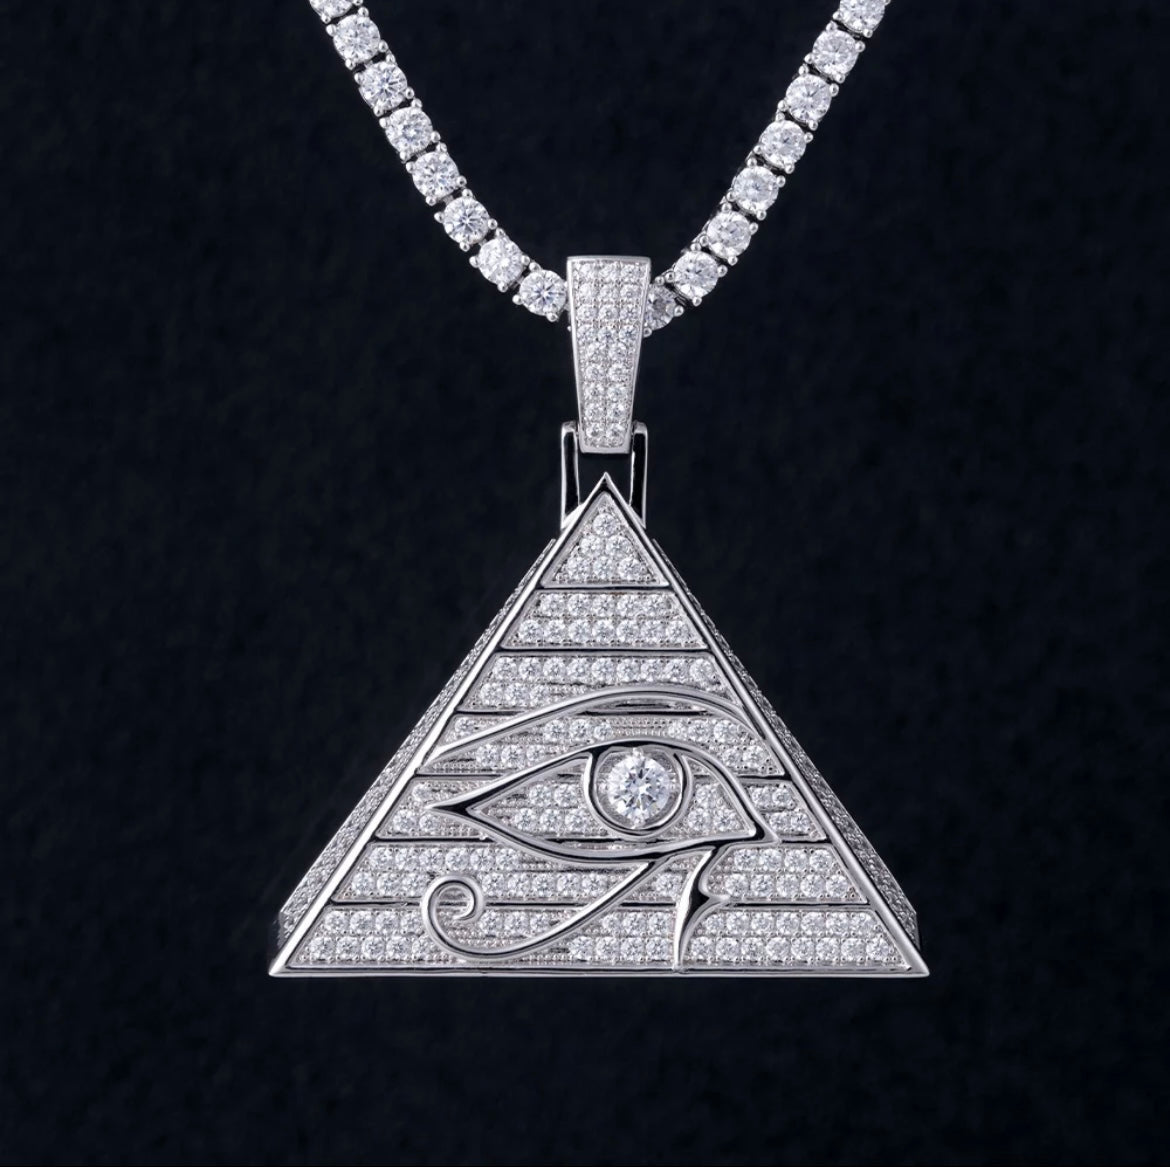 Iced Eye of Horus Pyramid Pendant